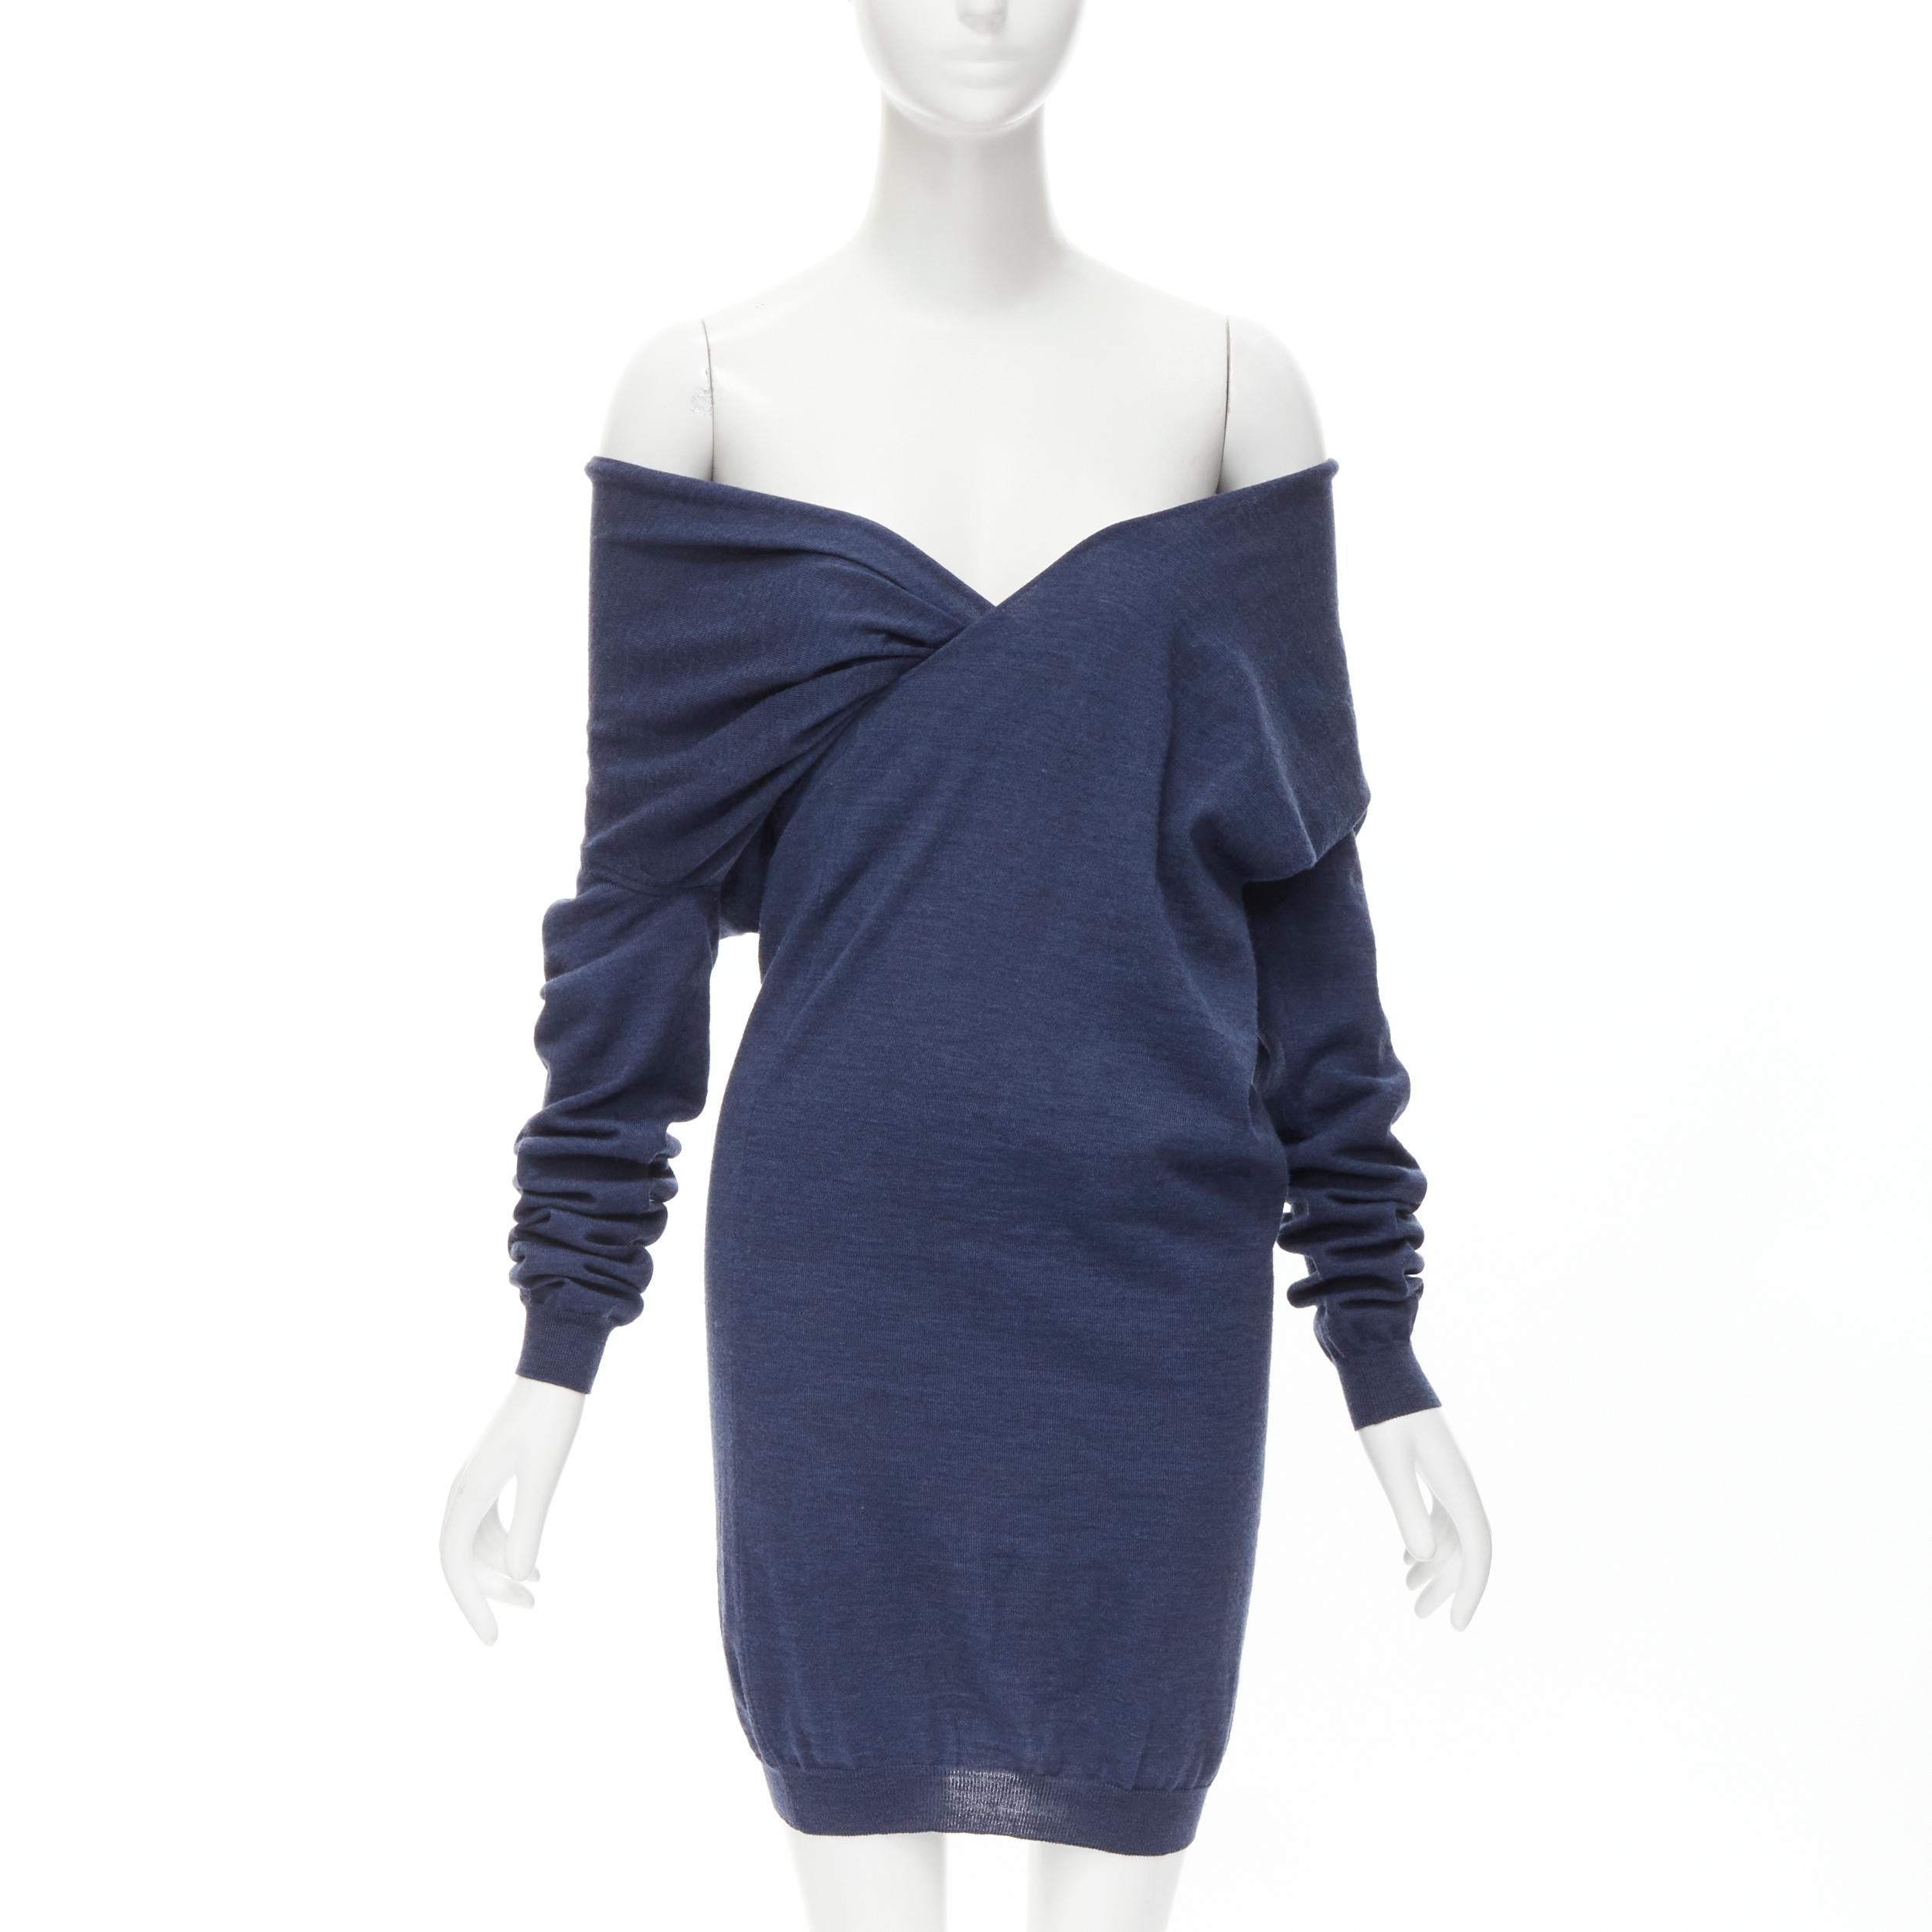 Purple LANVIN Alber Elbaz Les 10 Ans 100% wool wrap neckline knitted dress S